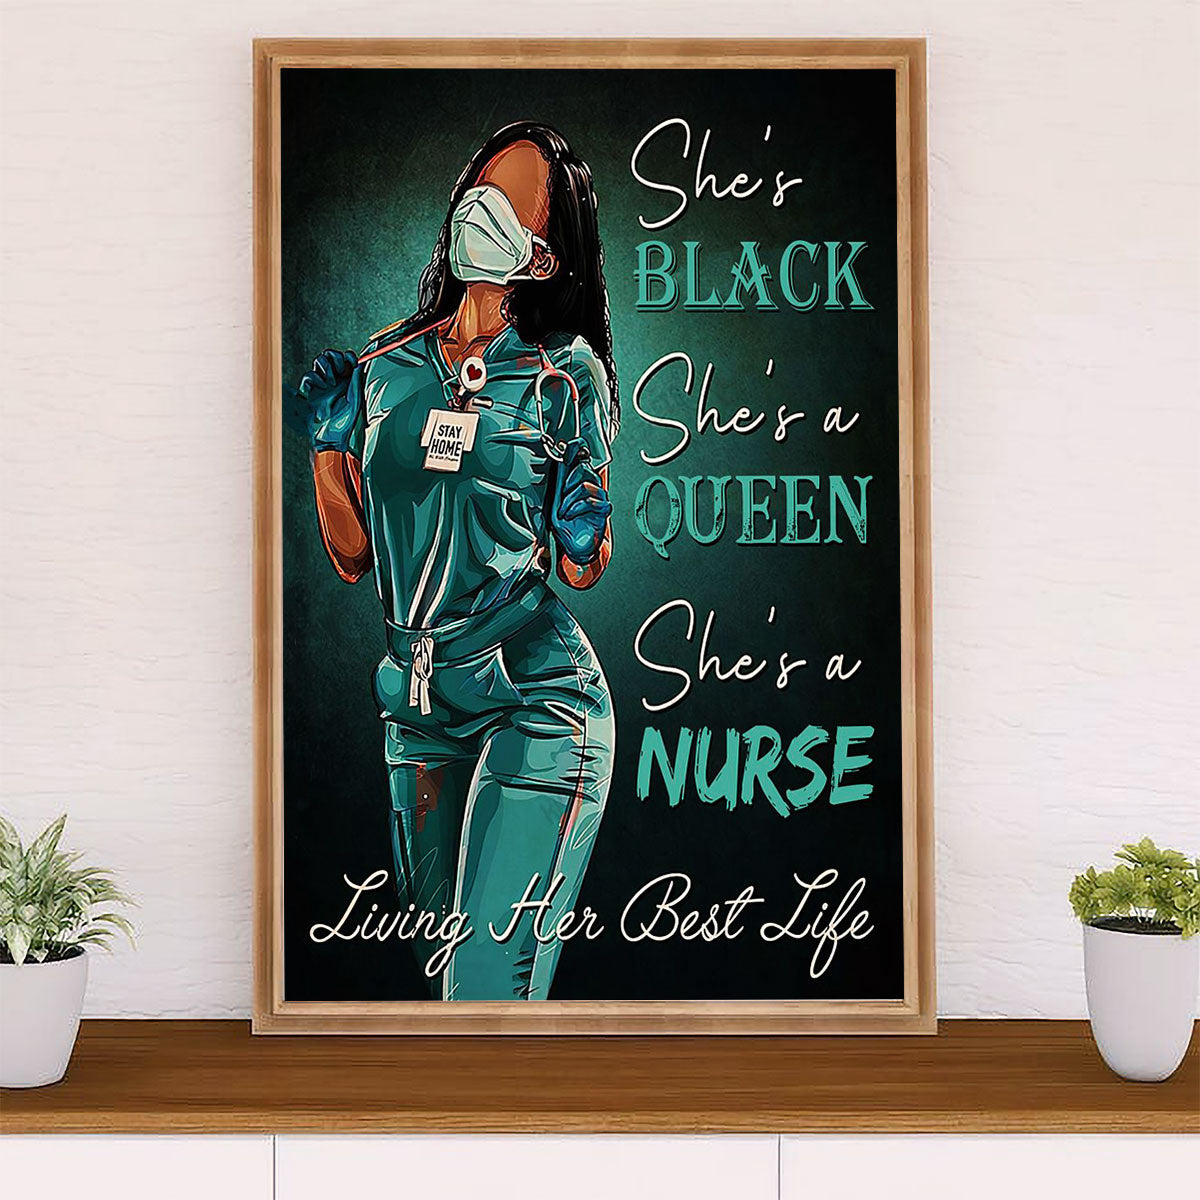 Nurse Poster | Black Queen Nurse | Wall Art Gift for Woman Nurse, Female Nursing